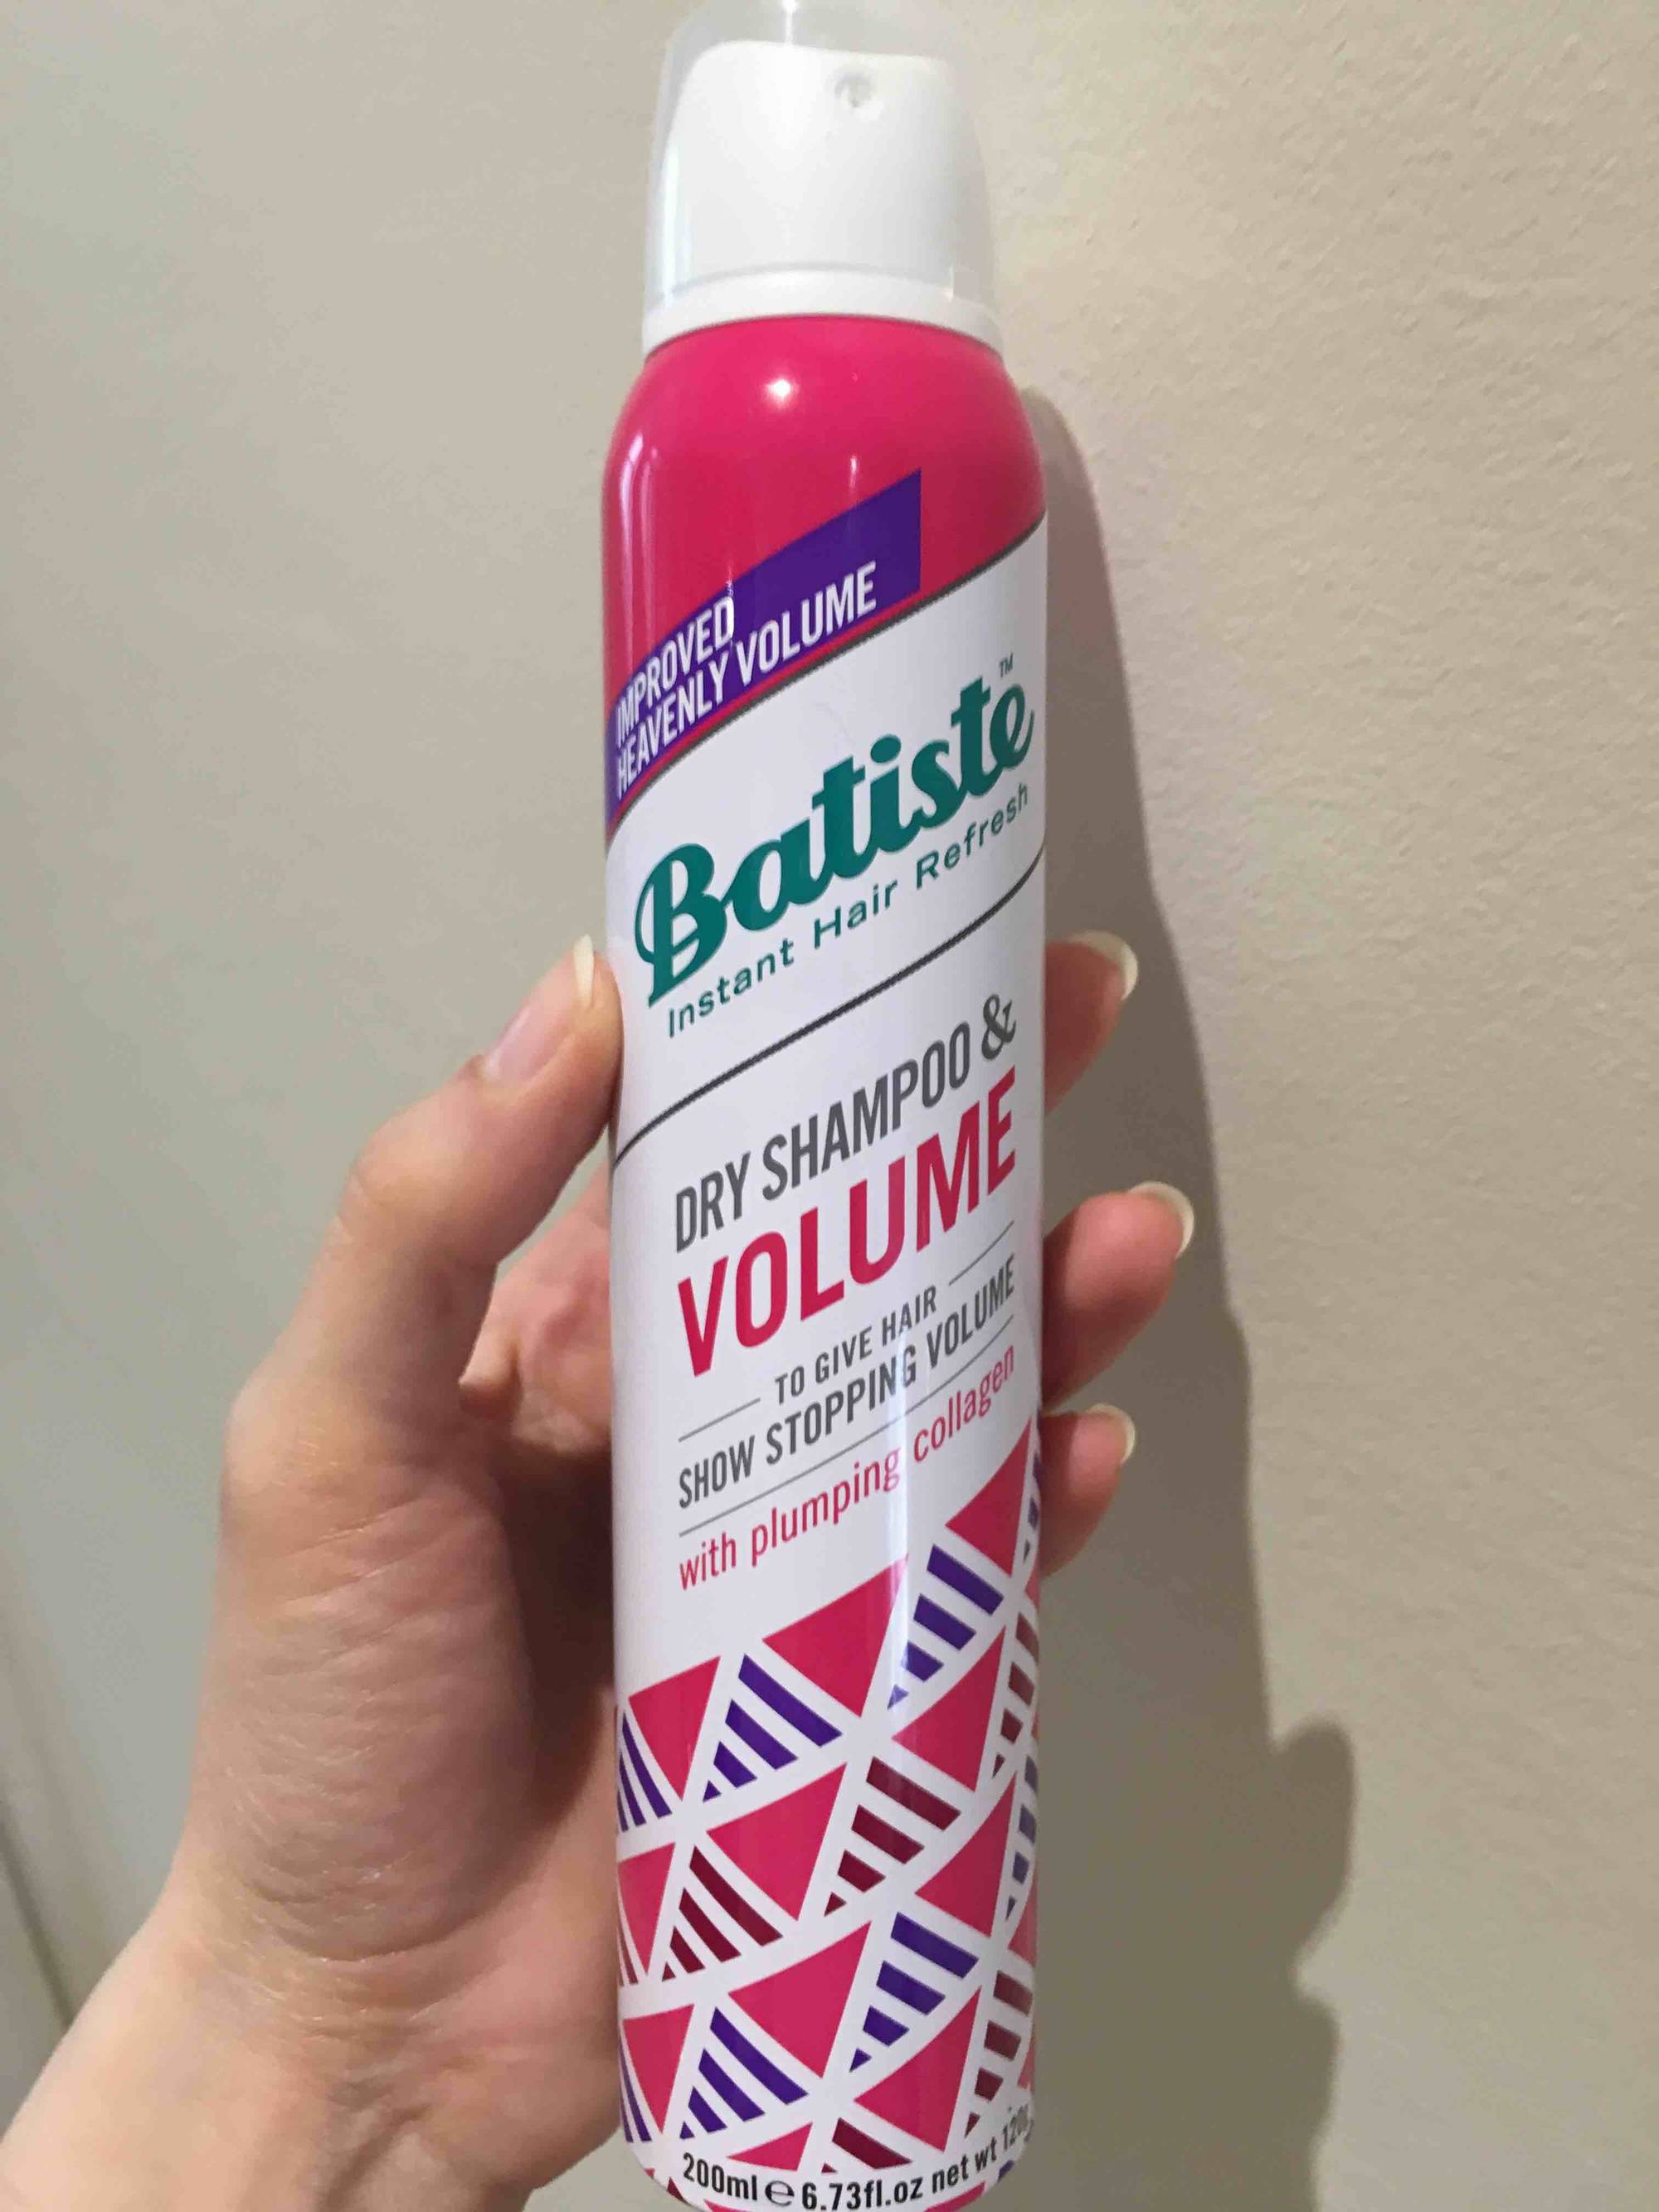 BATISTE - Dry shampoo & volume